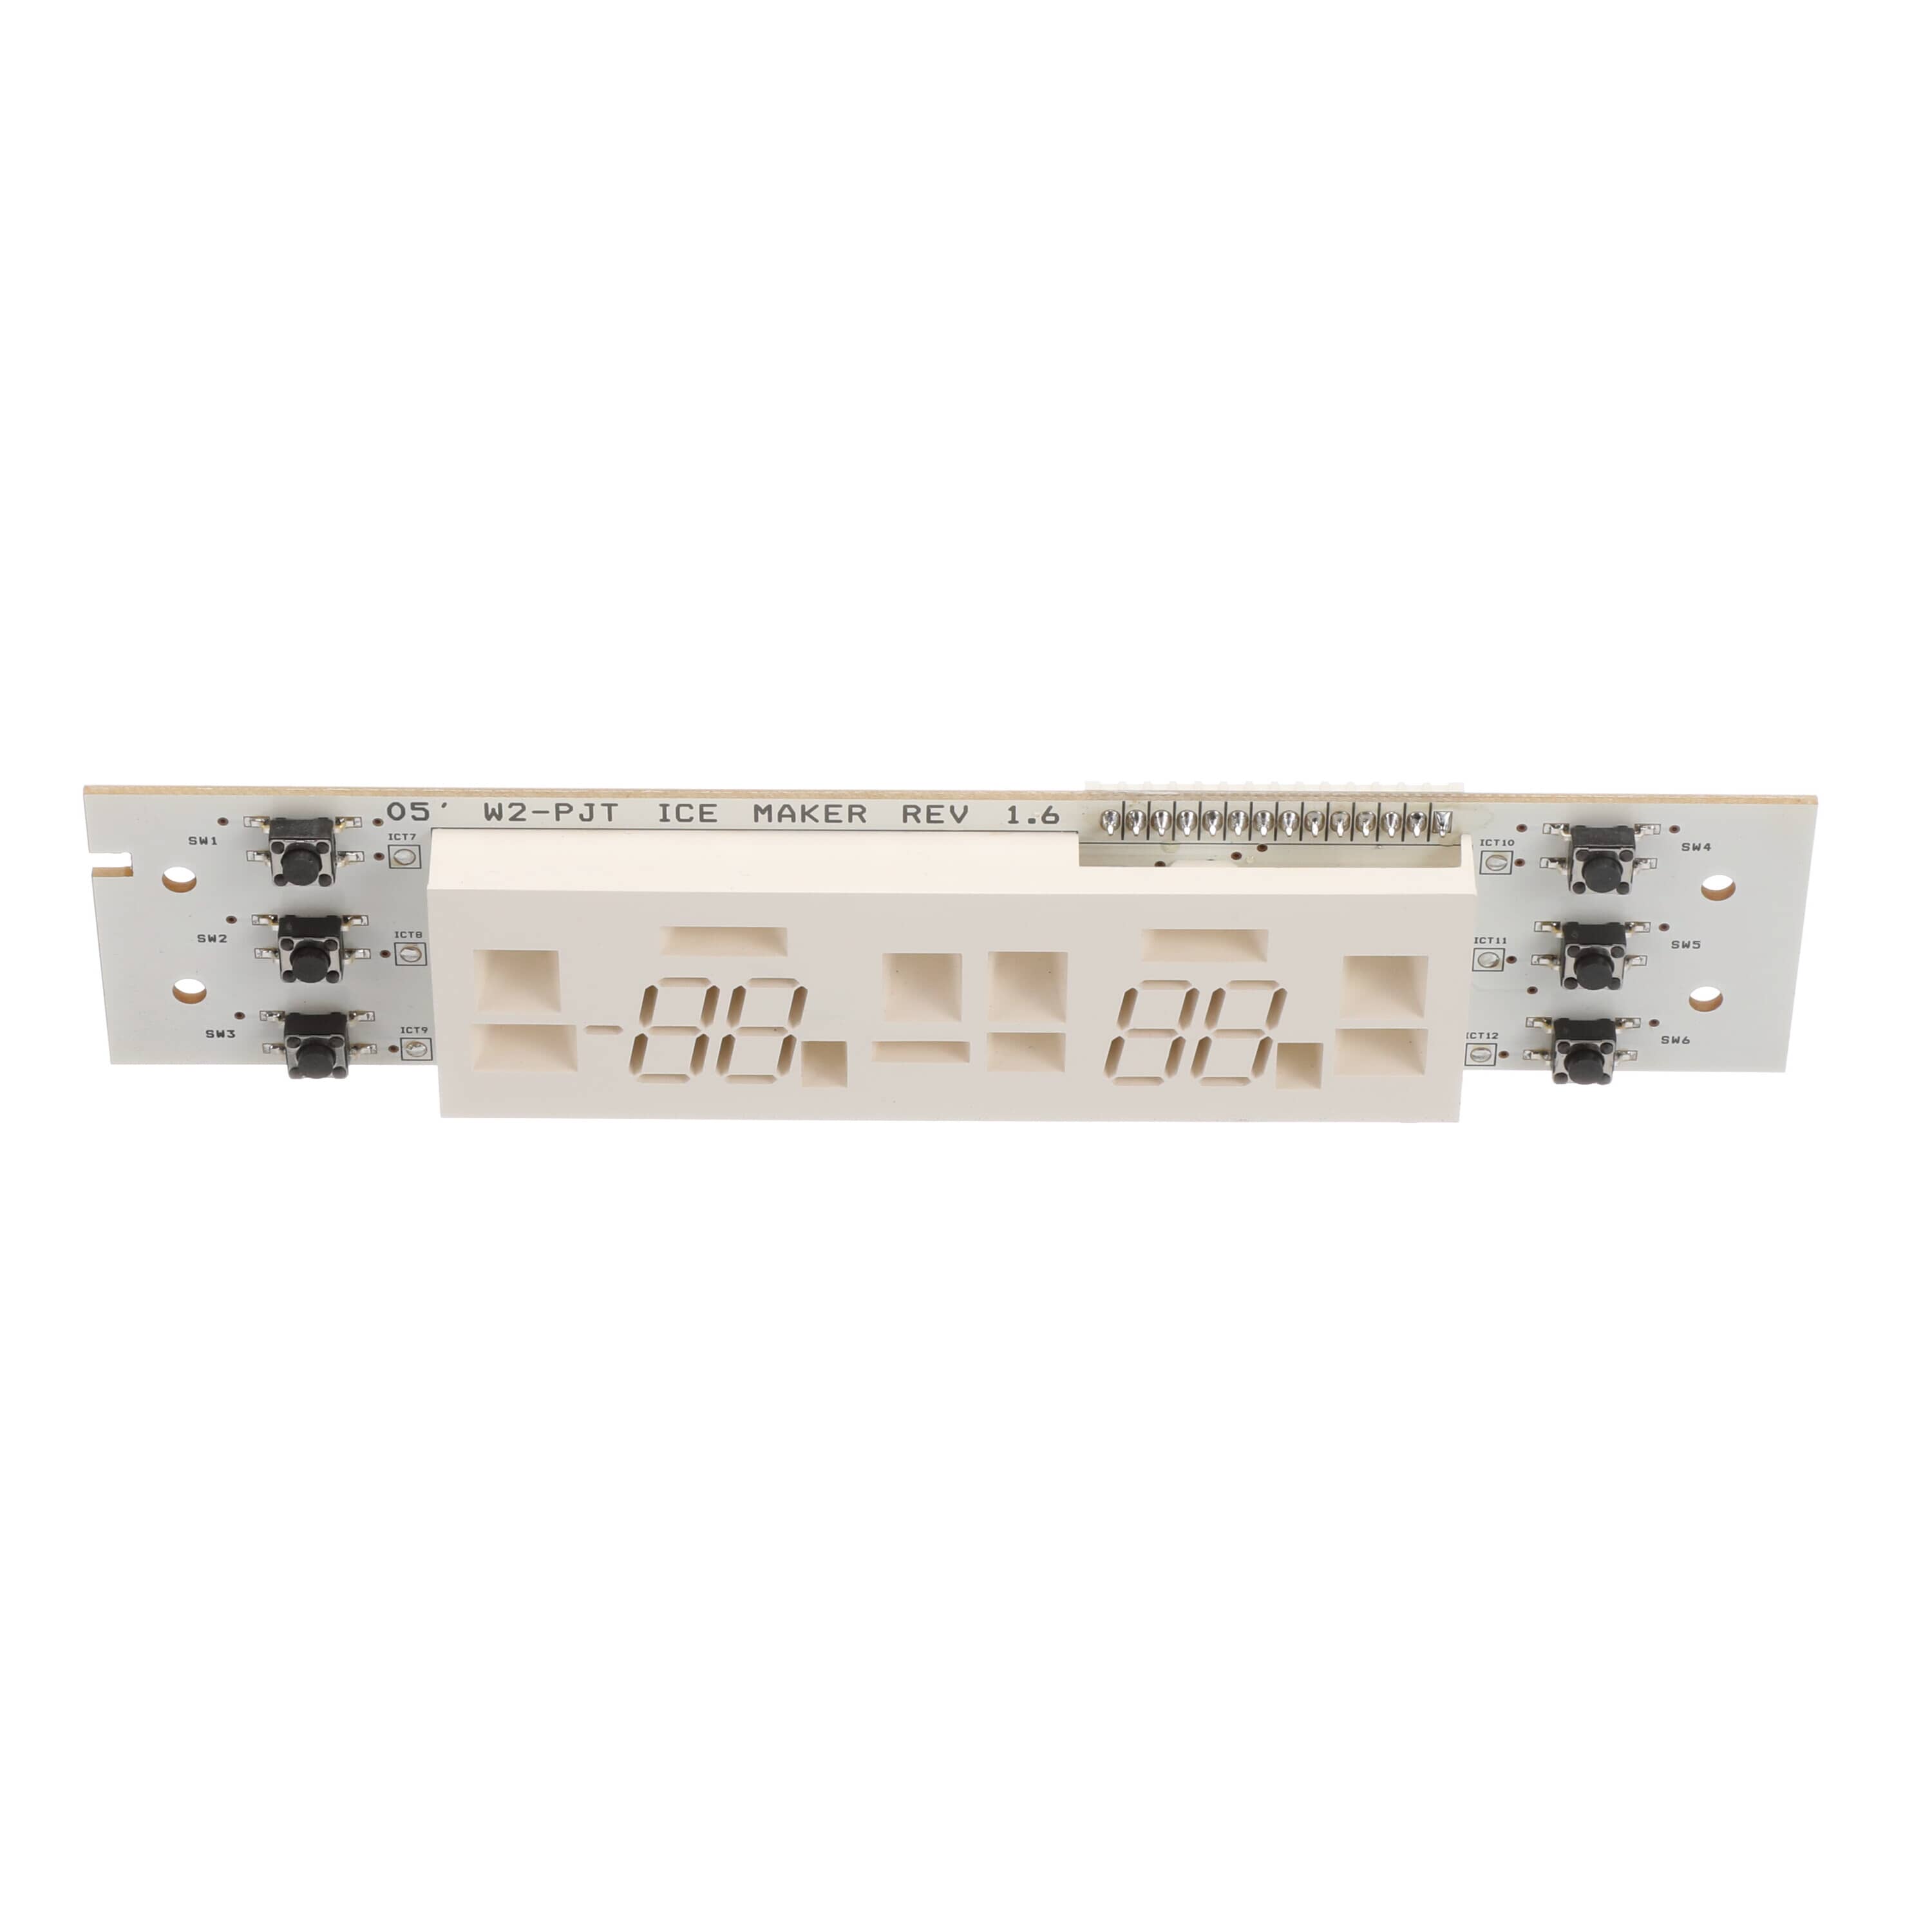 DA41-00264A LCD PCB Board KIT Assembly